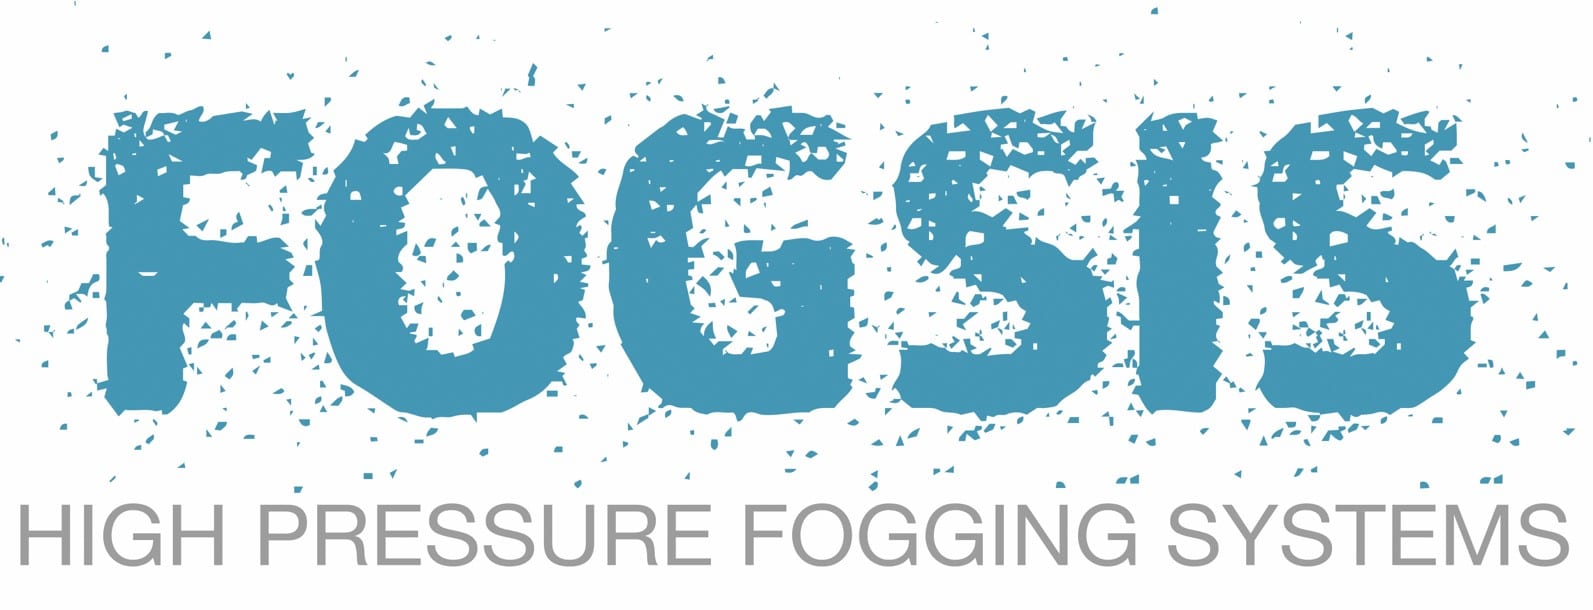 Fogsis High Pressure Fogging Systems